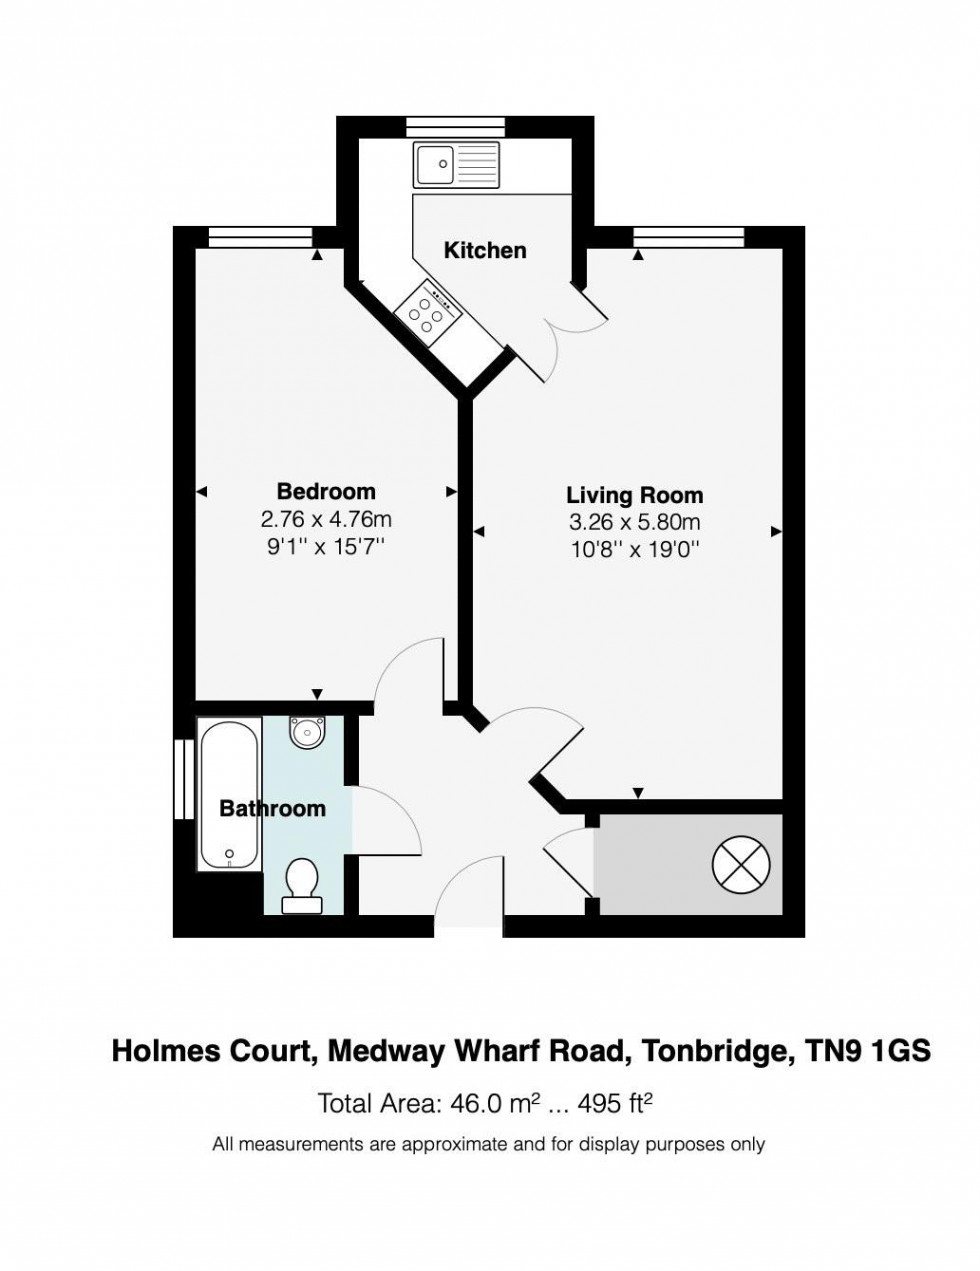 Floorplan for 1 Bedroom Retirement Flat, Medway Wharf Road, Tonbridge